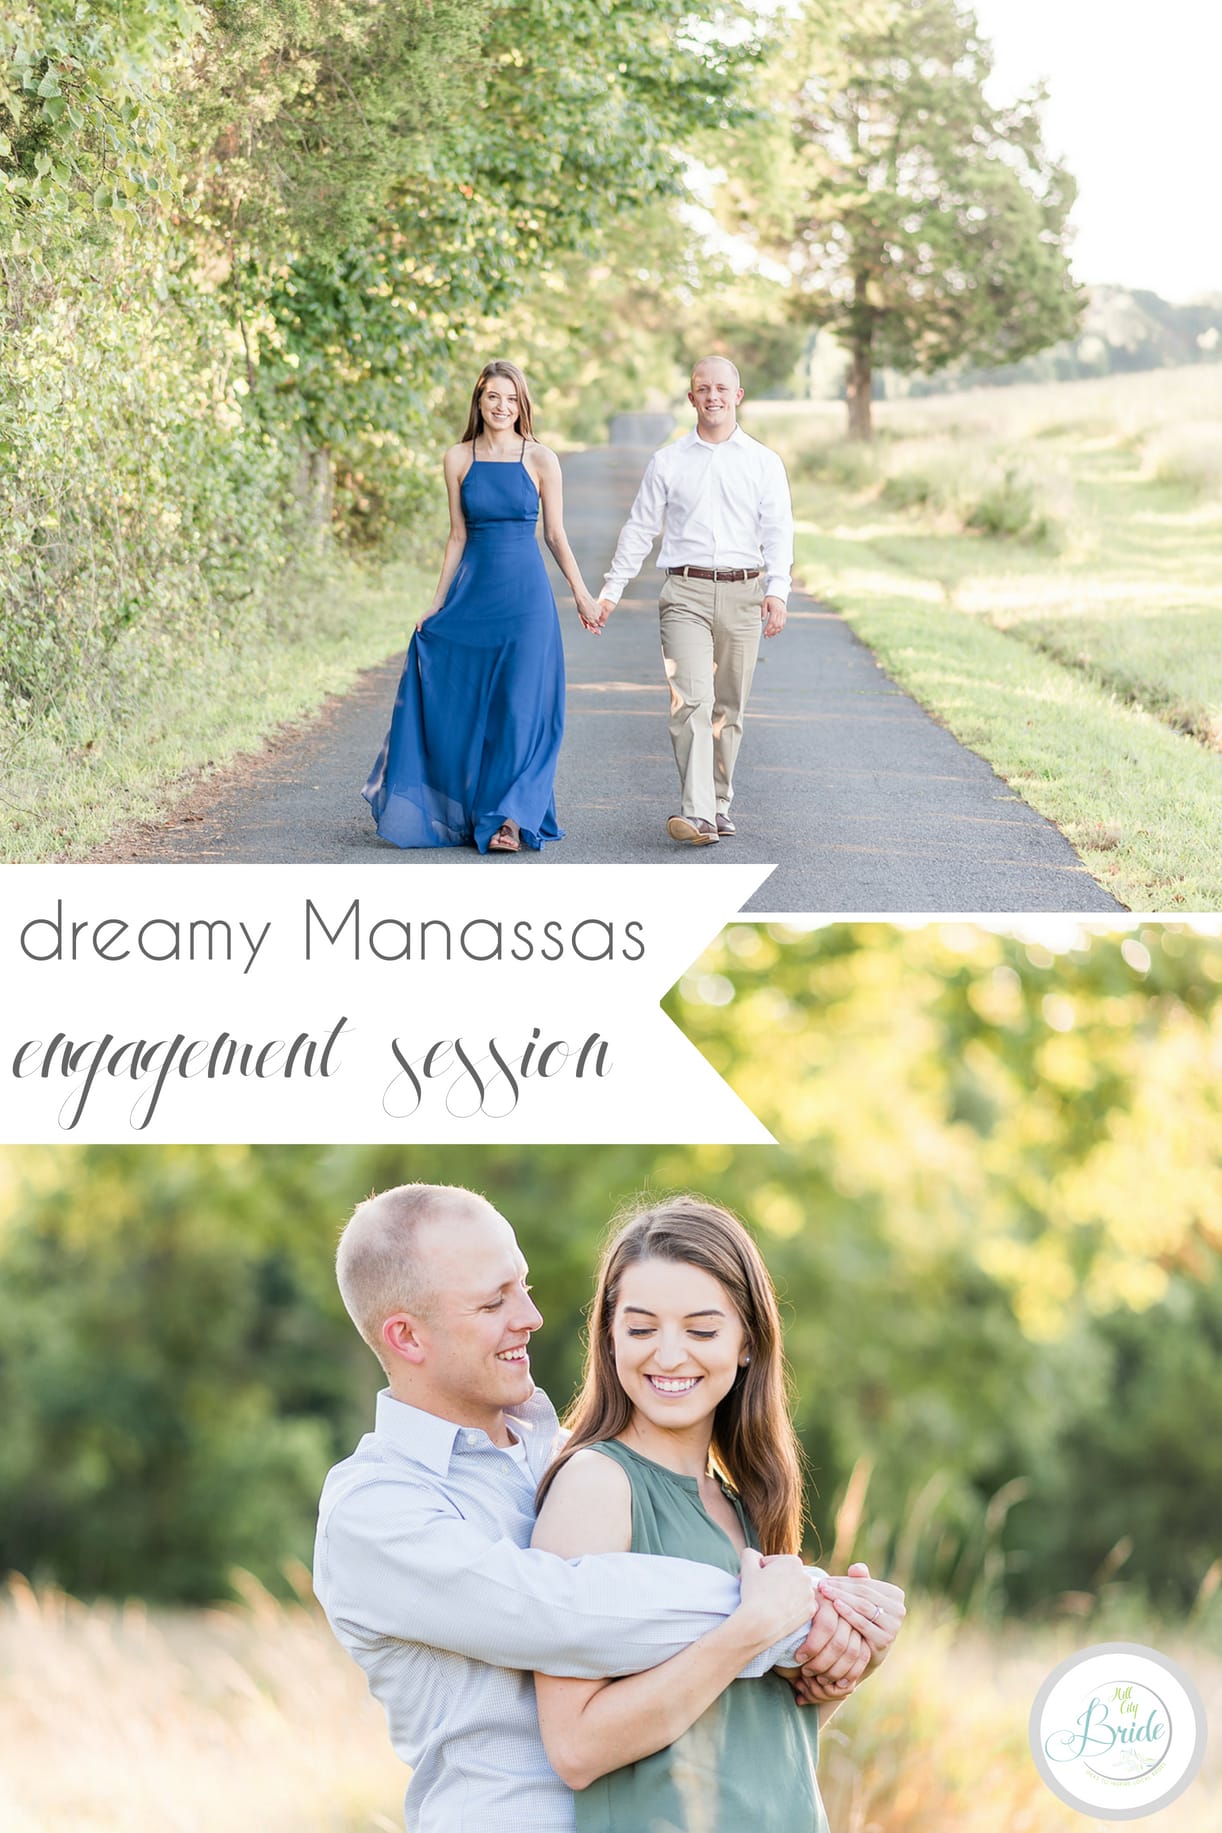 Manassas Engagement Session | Hill City Bride Virginia Wedding Blog